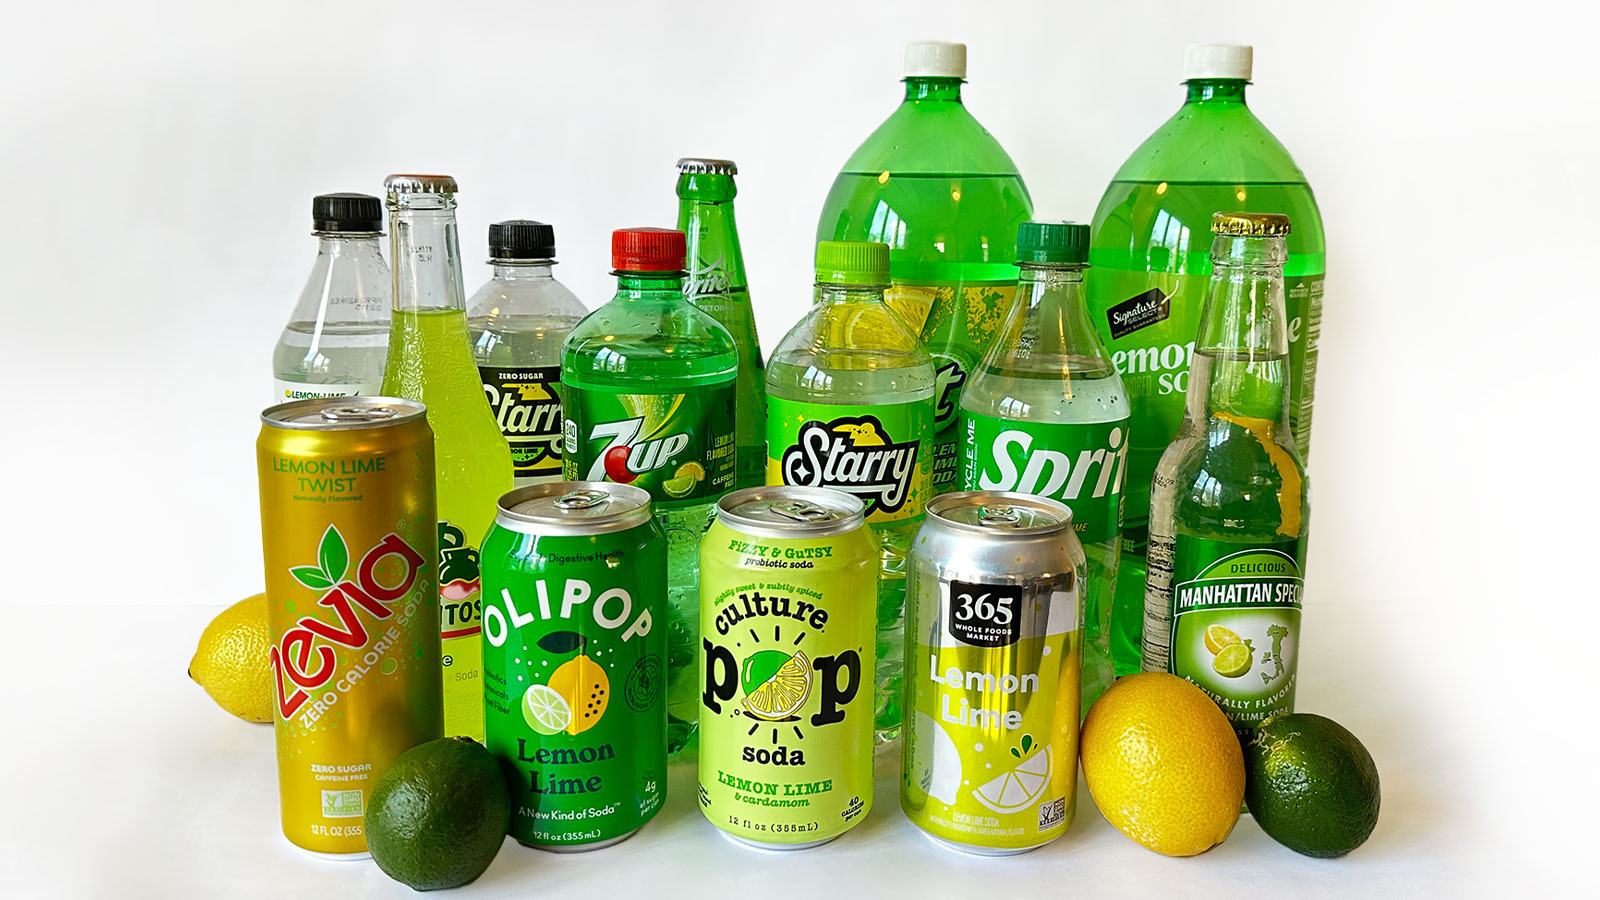 Sprite Zero Sugar Lemon Lime Soda - 20 oz btl